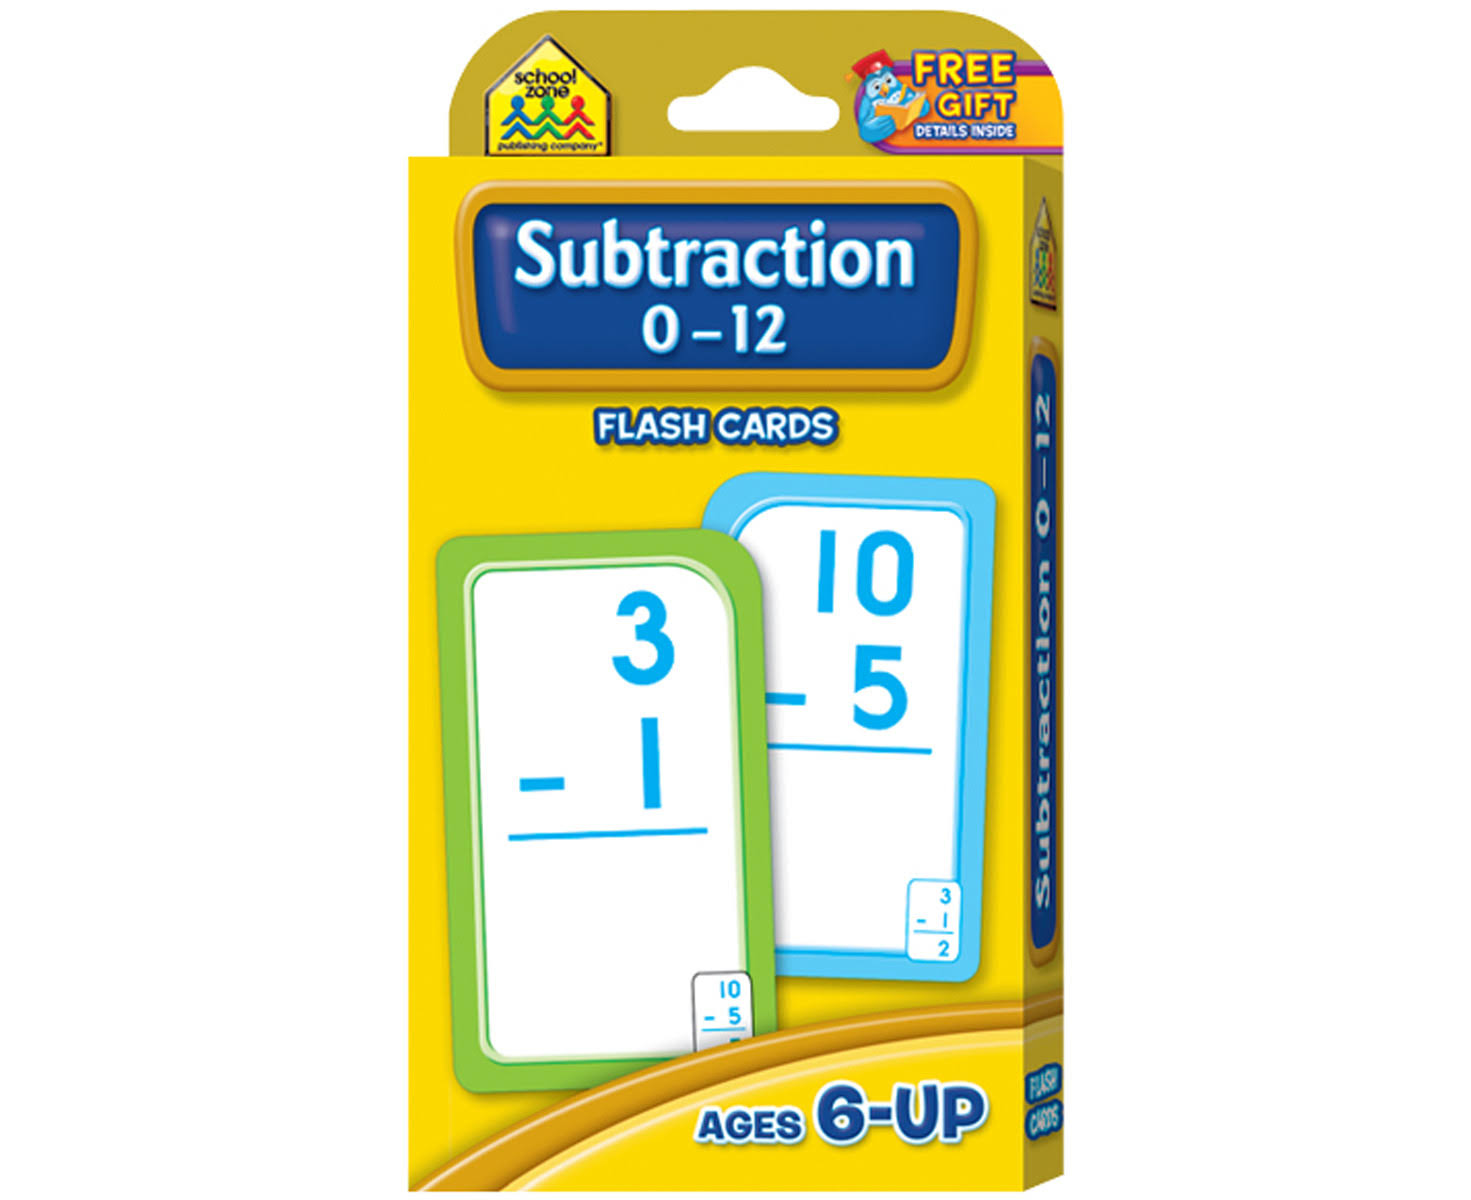 School Zone Flash Cards - Subtraction 0-12